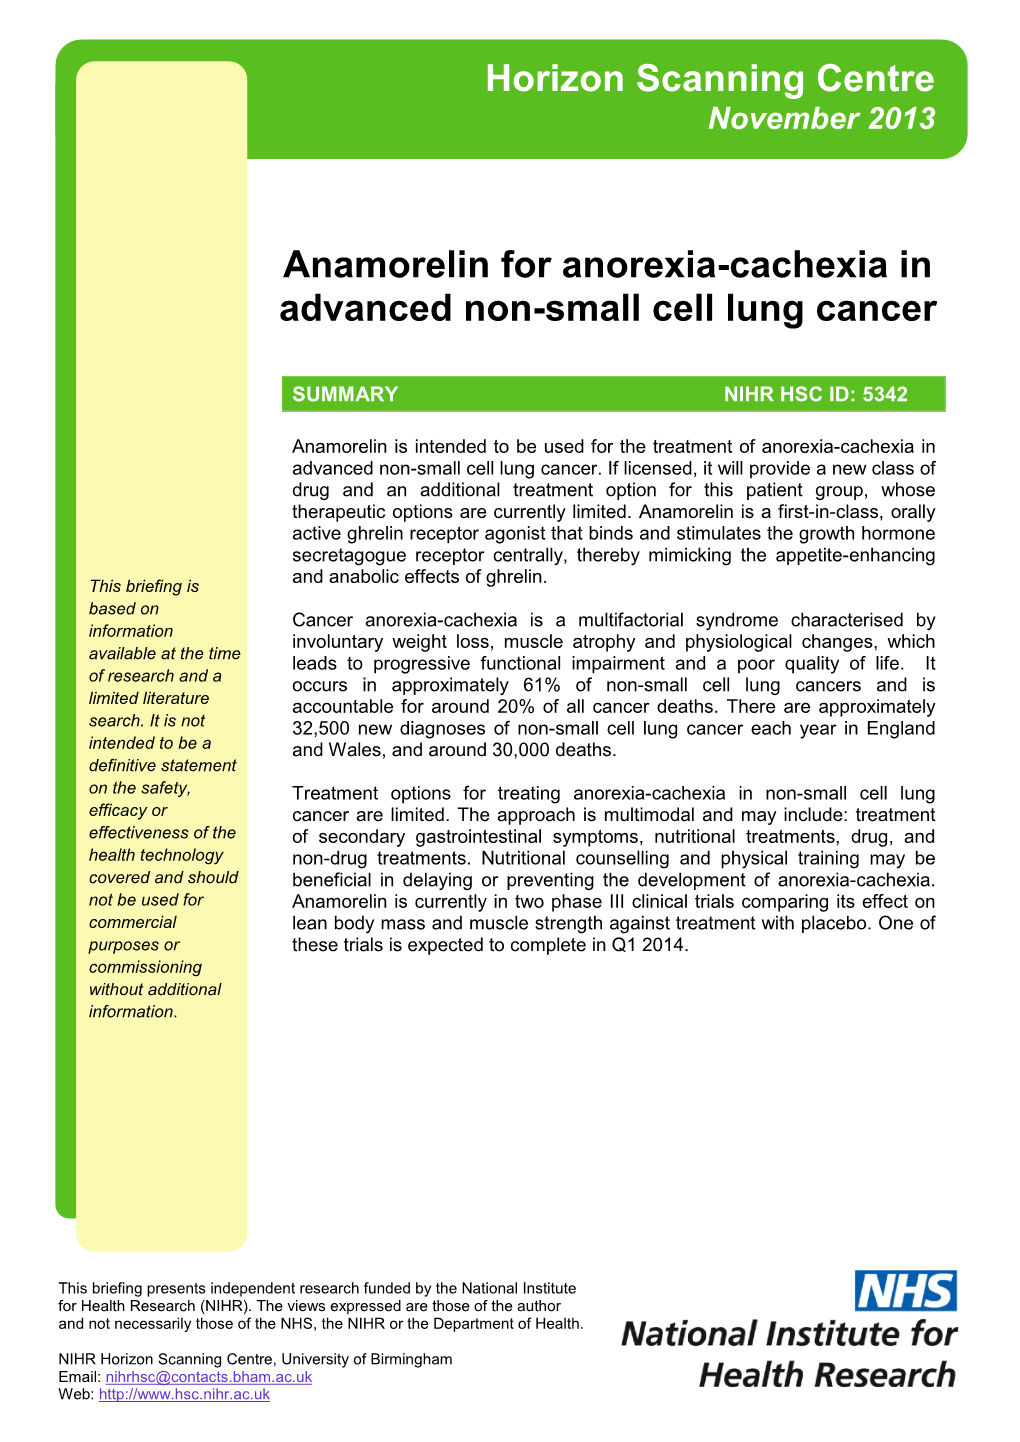 Anamorelin for Anorexia-Cachexia in Advanced Non-Small Cell Lung Cancer